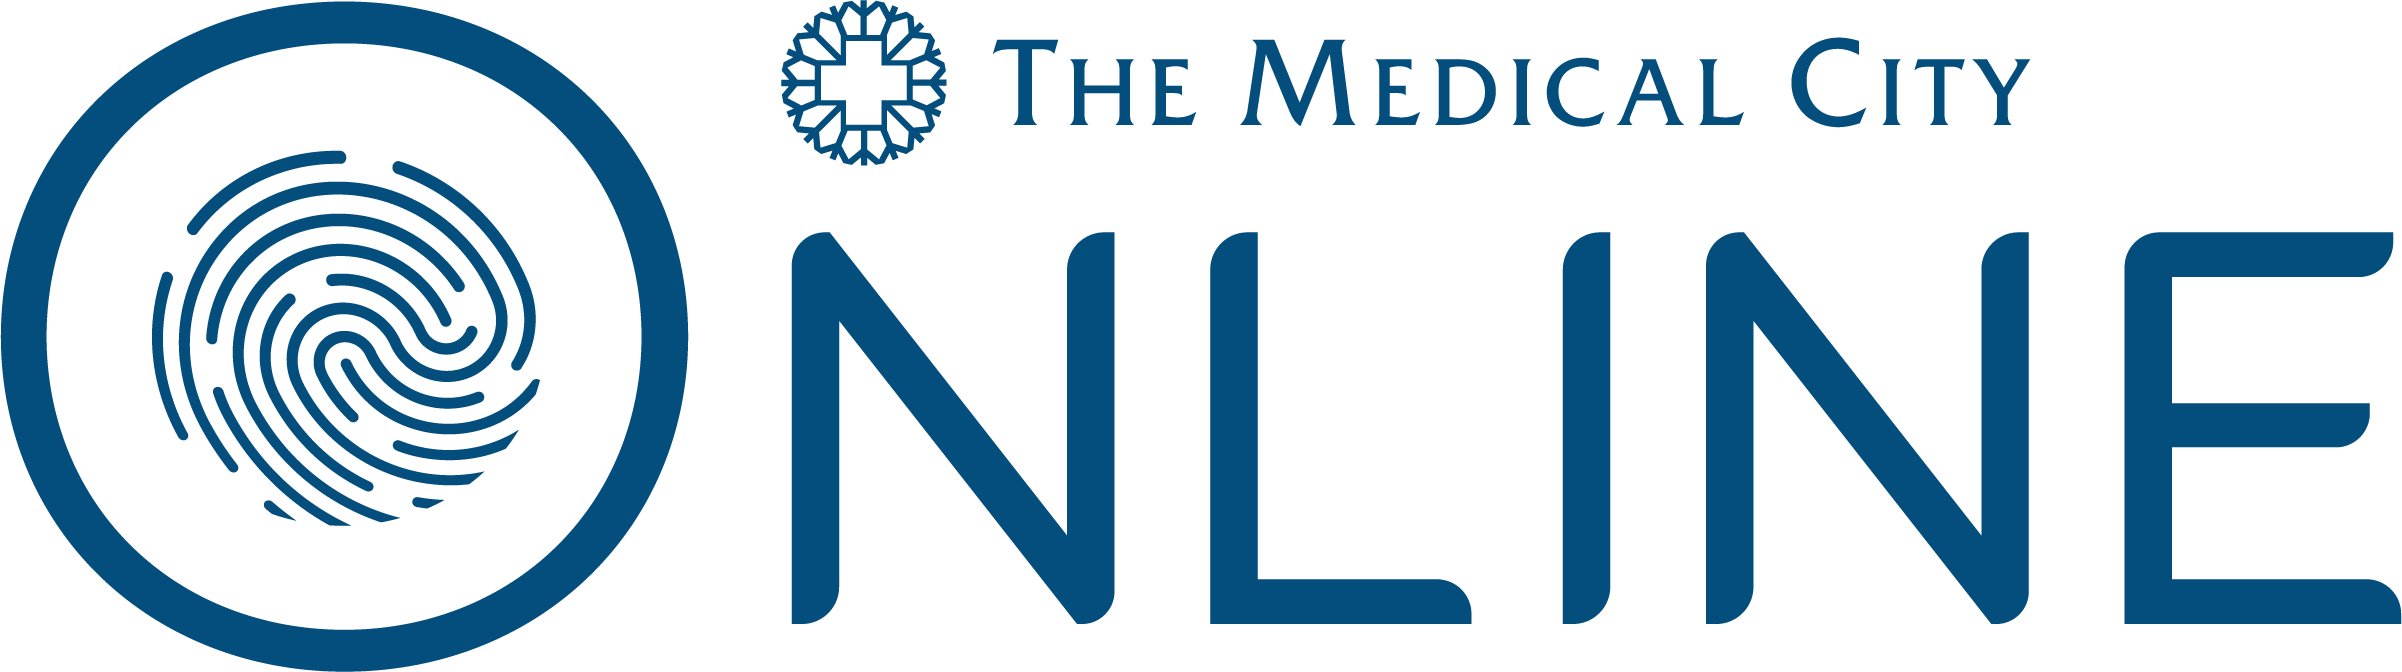 the medical city online logo